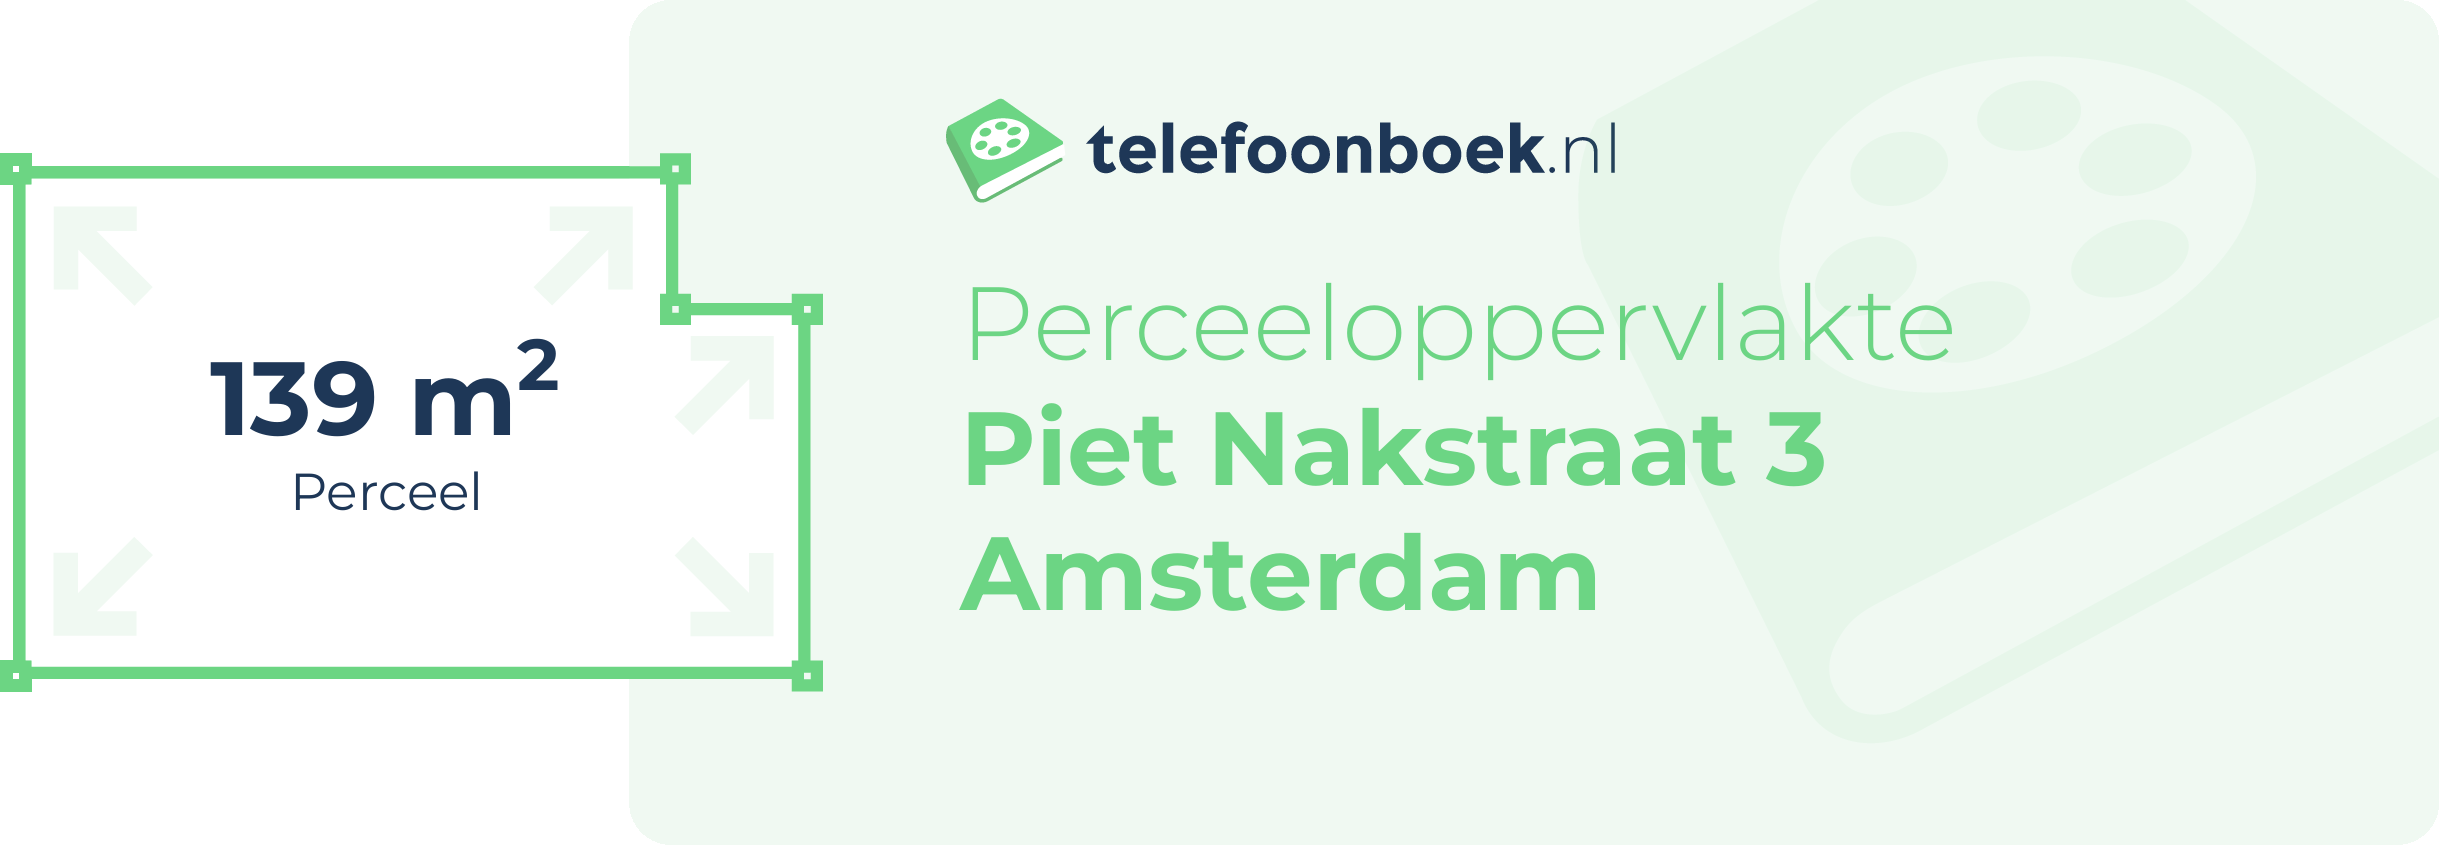 Perceeloppervlakte Piet Nakstraat 3 Amsterdam